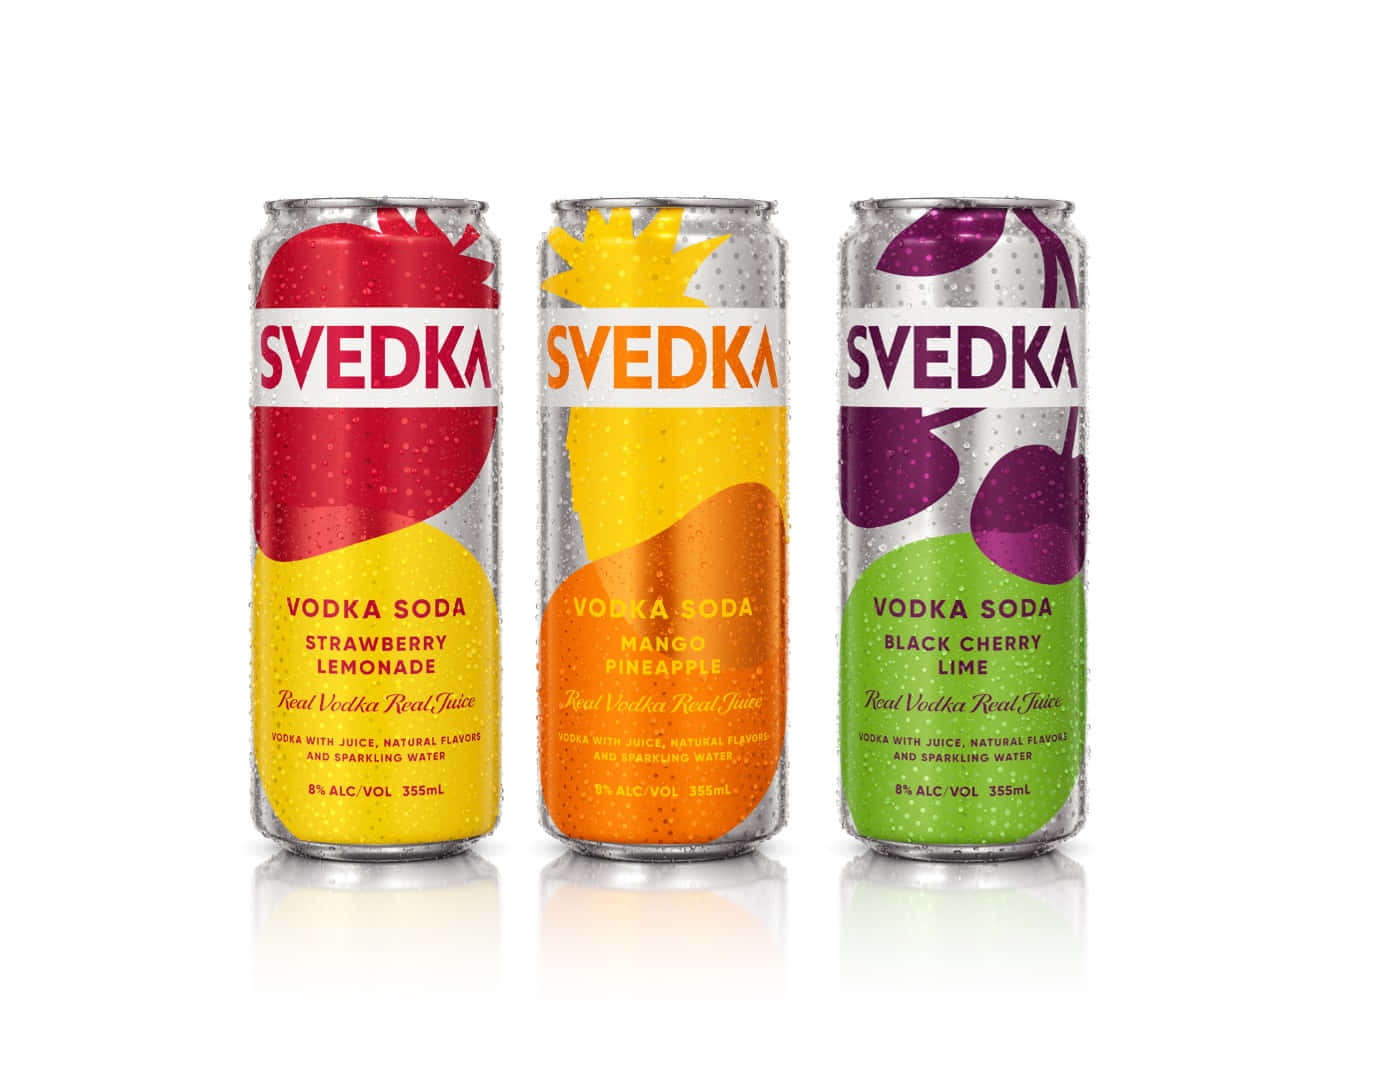 Refreshing Svedka Vodka Soda in a Can Wallpaper